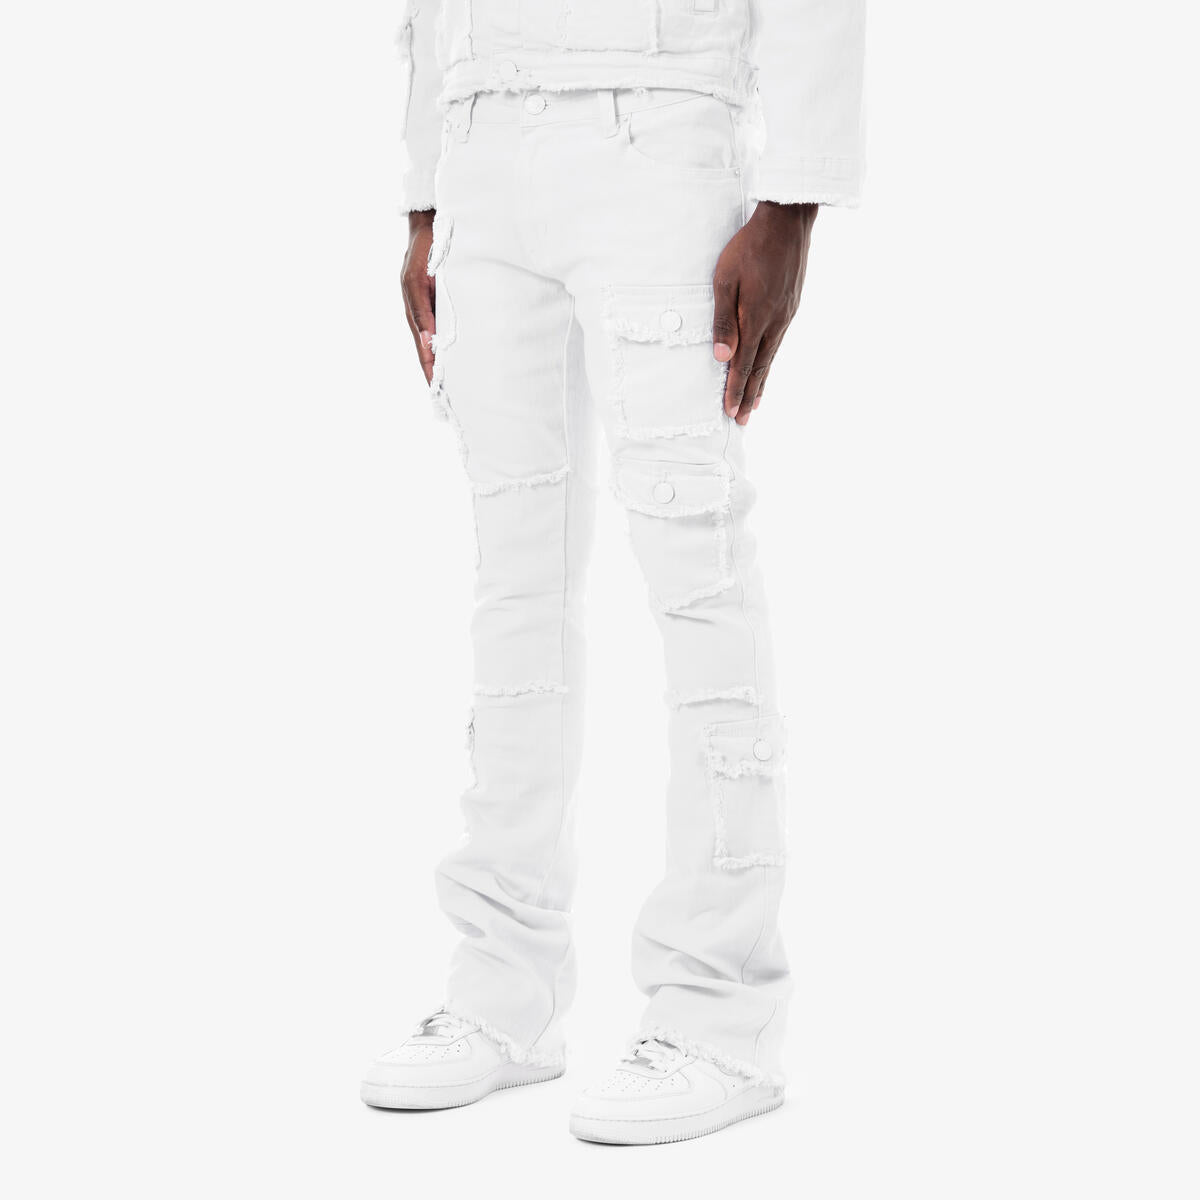 Copper Rivet White Multi Pockets Stacked Flare White Denim Jeans